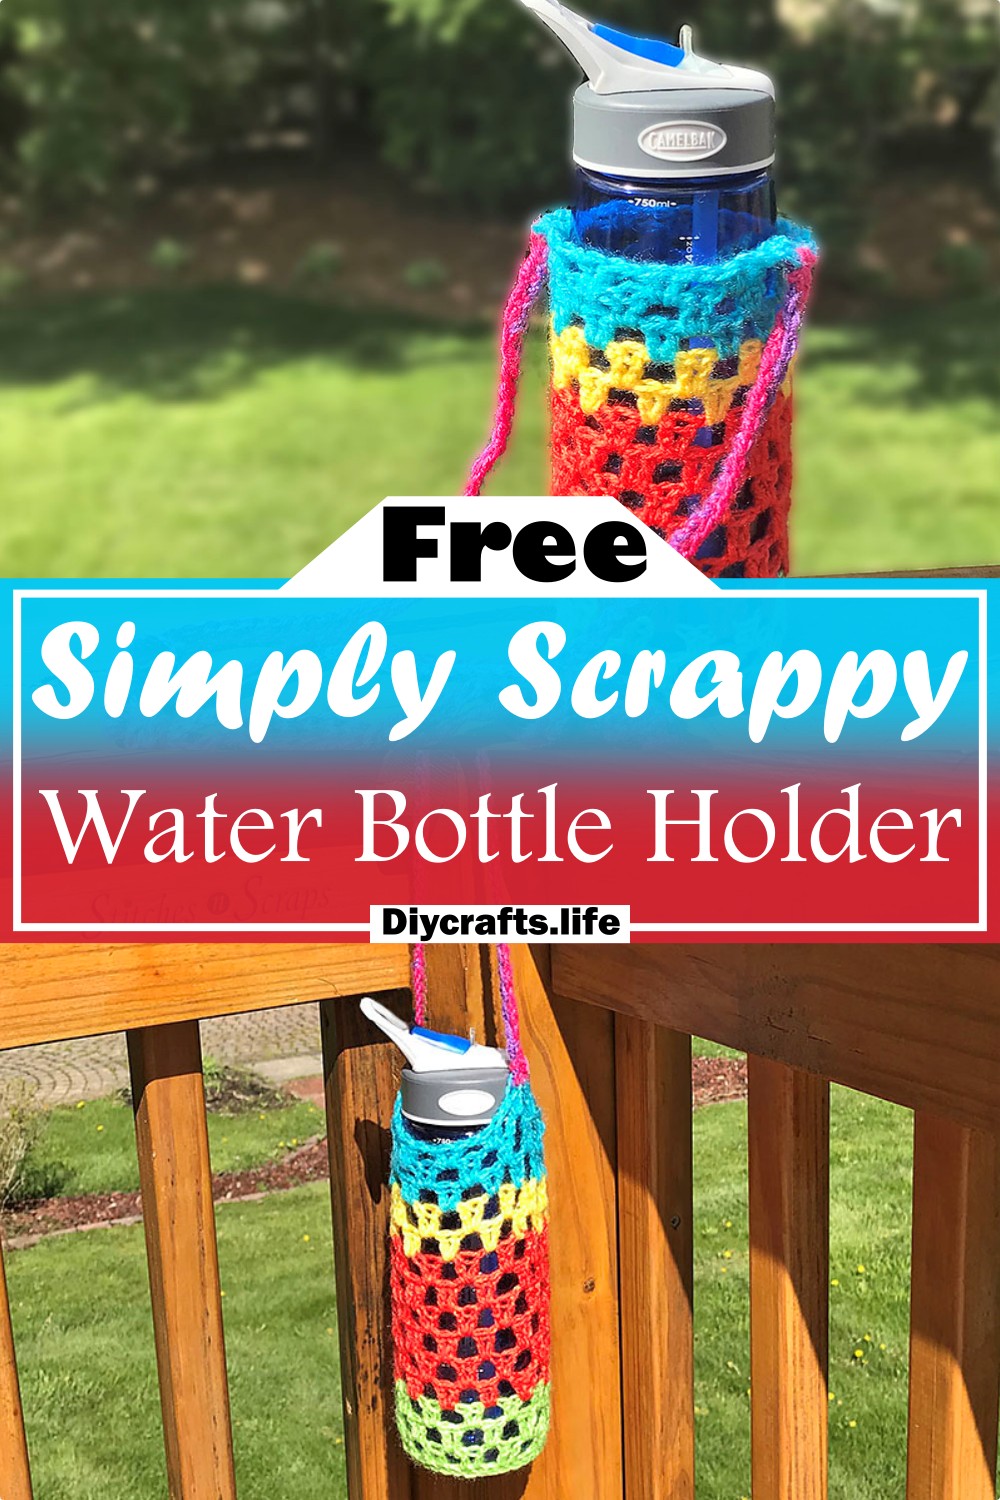 Simply Scrappy Water Bottle Holder Pattern